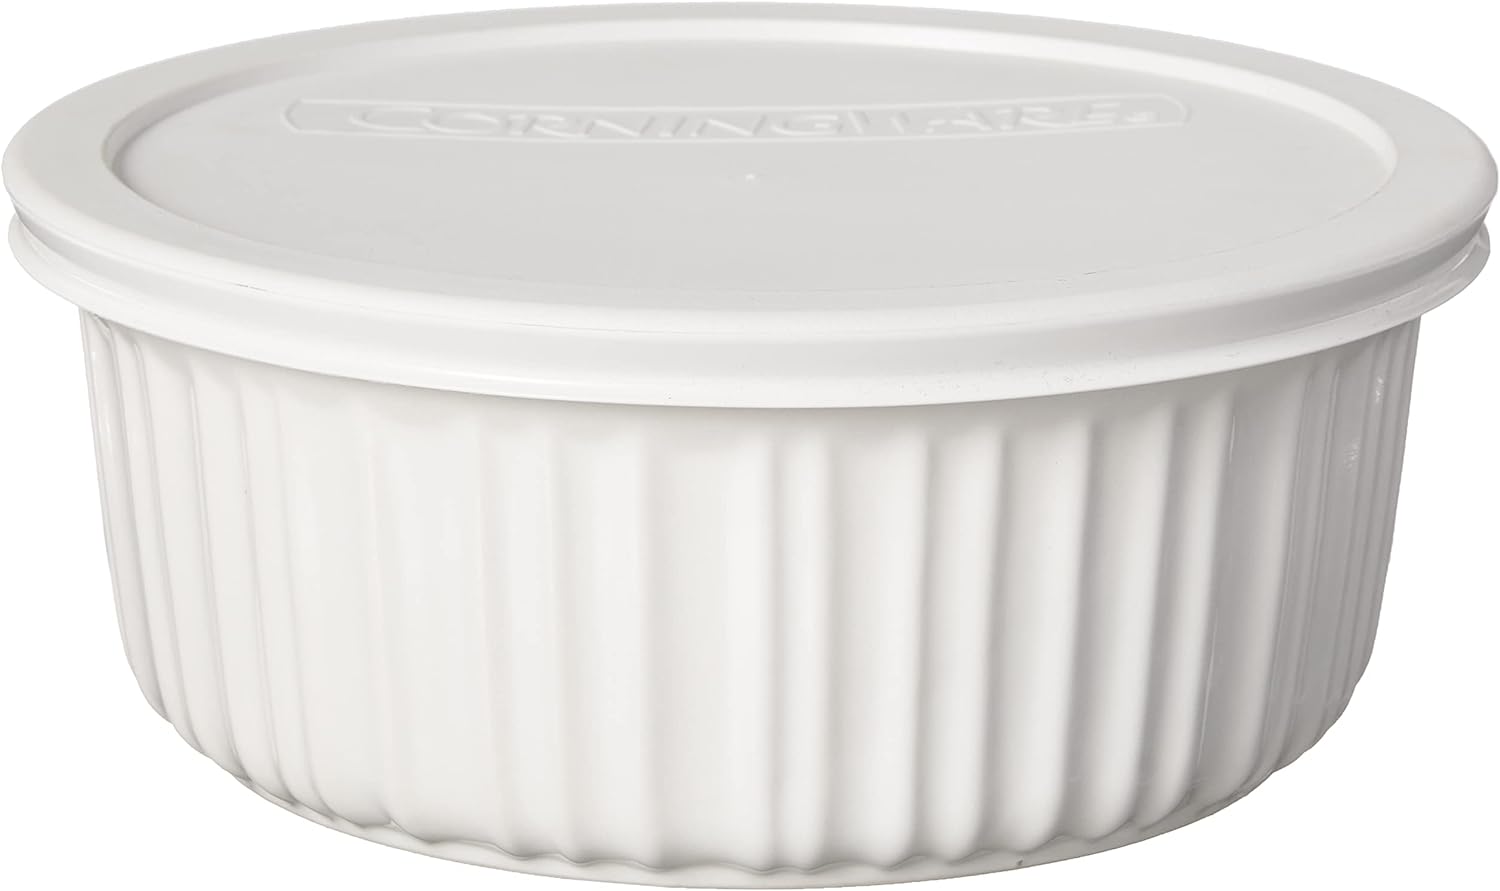 French White 10-piece Round Bakeware Set